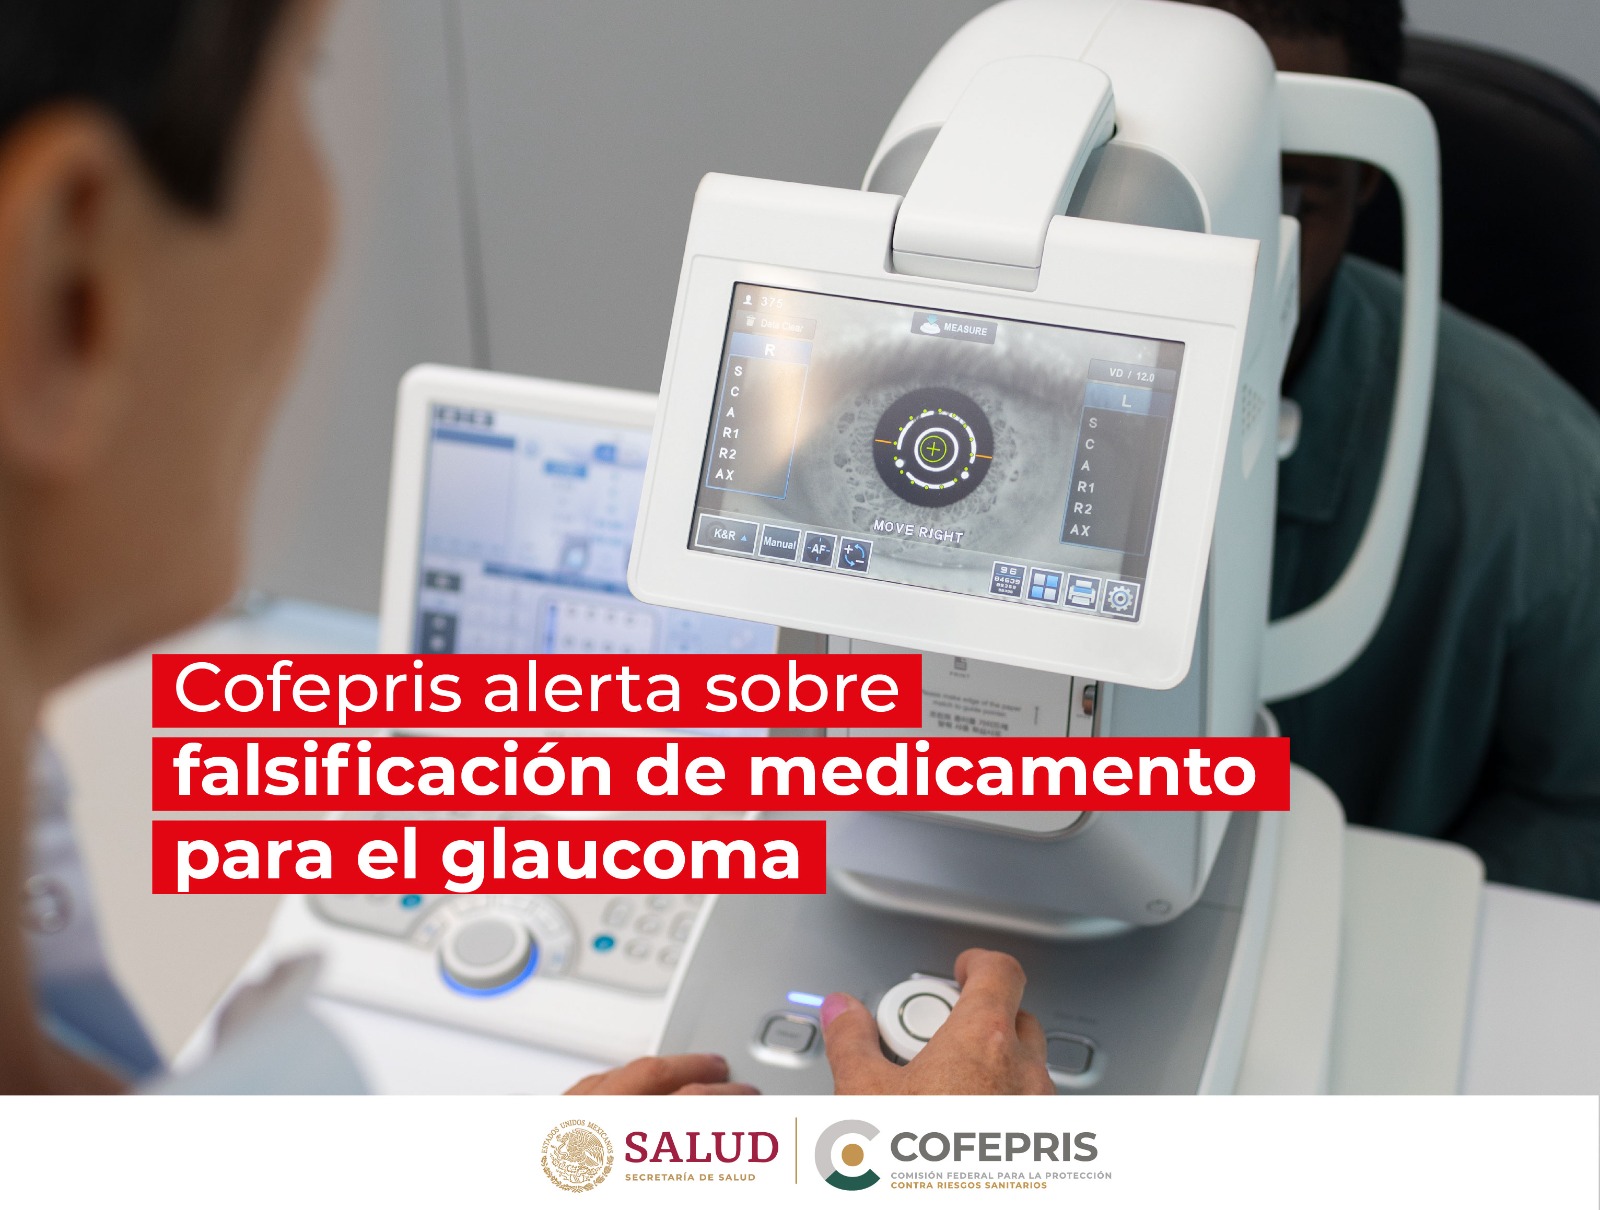 Cofepris emite alerta sobre falsificación de medicamento para glaucoma